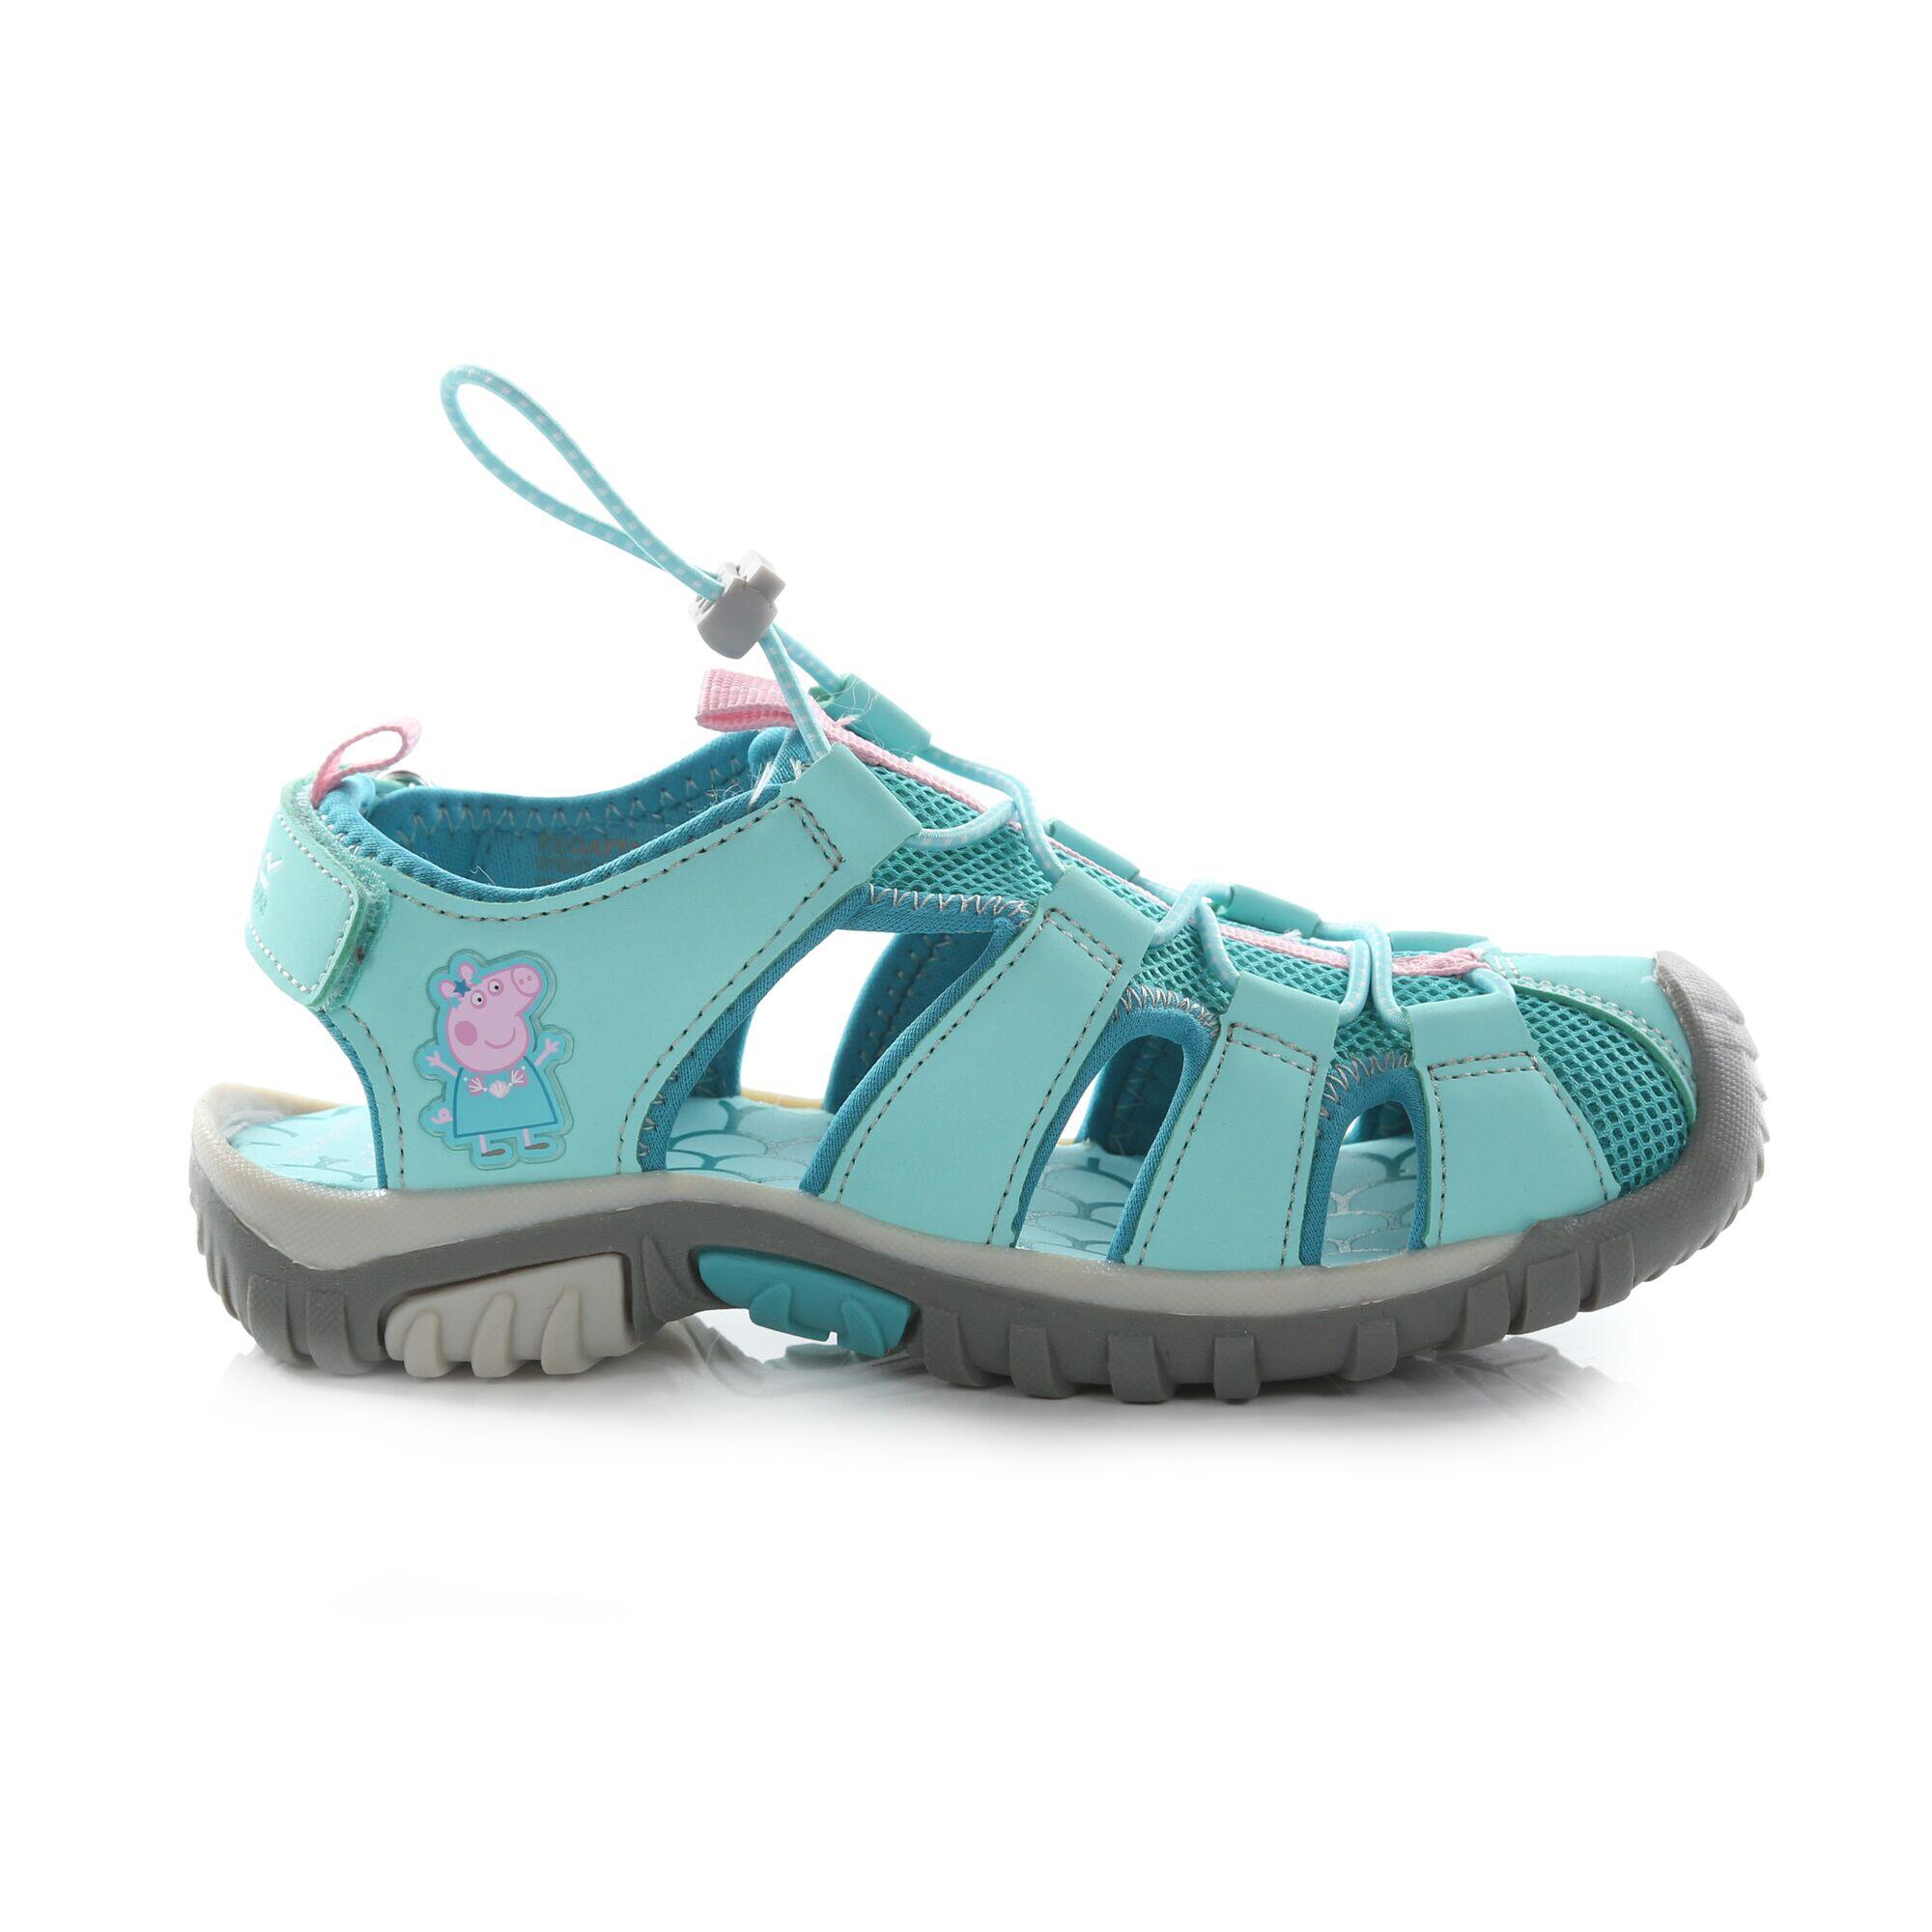 Peppa Pig Kids Walking Sandals - Aruba Blue 1/5